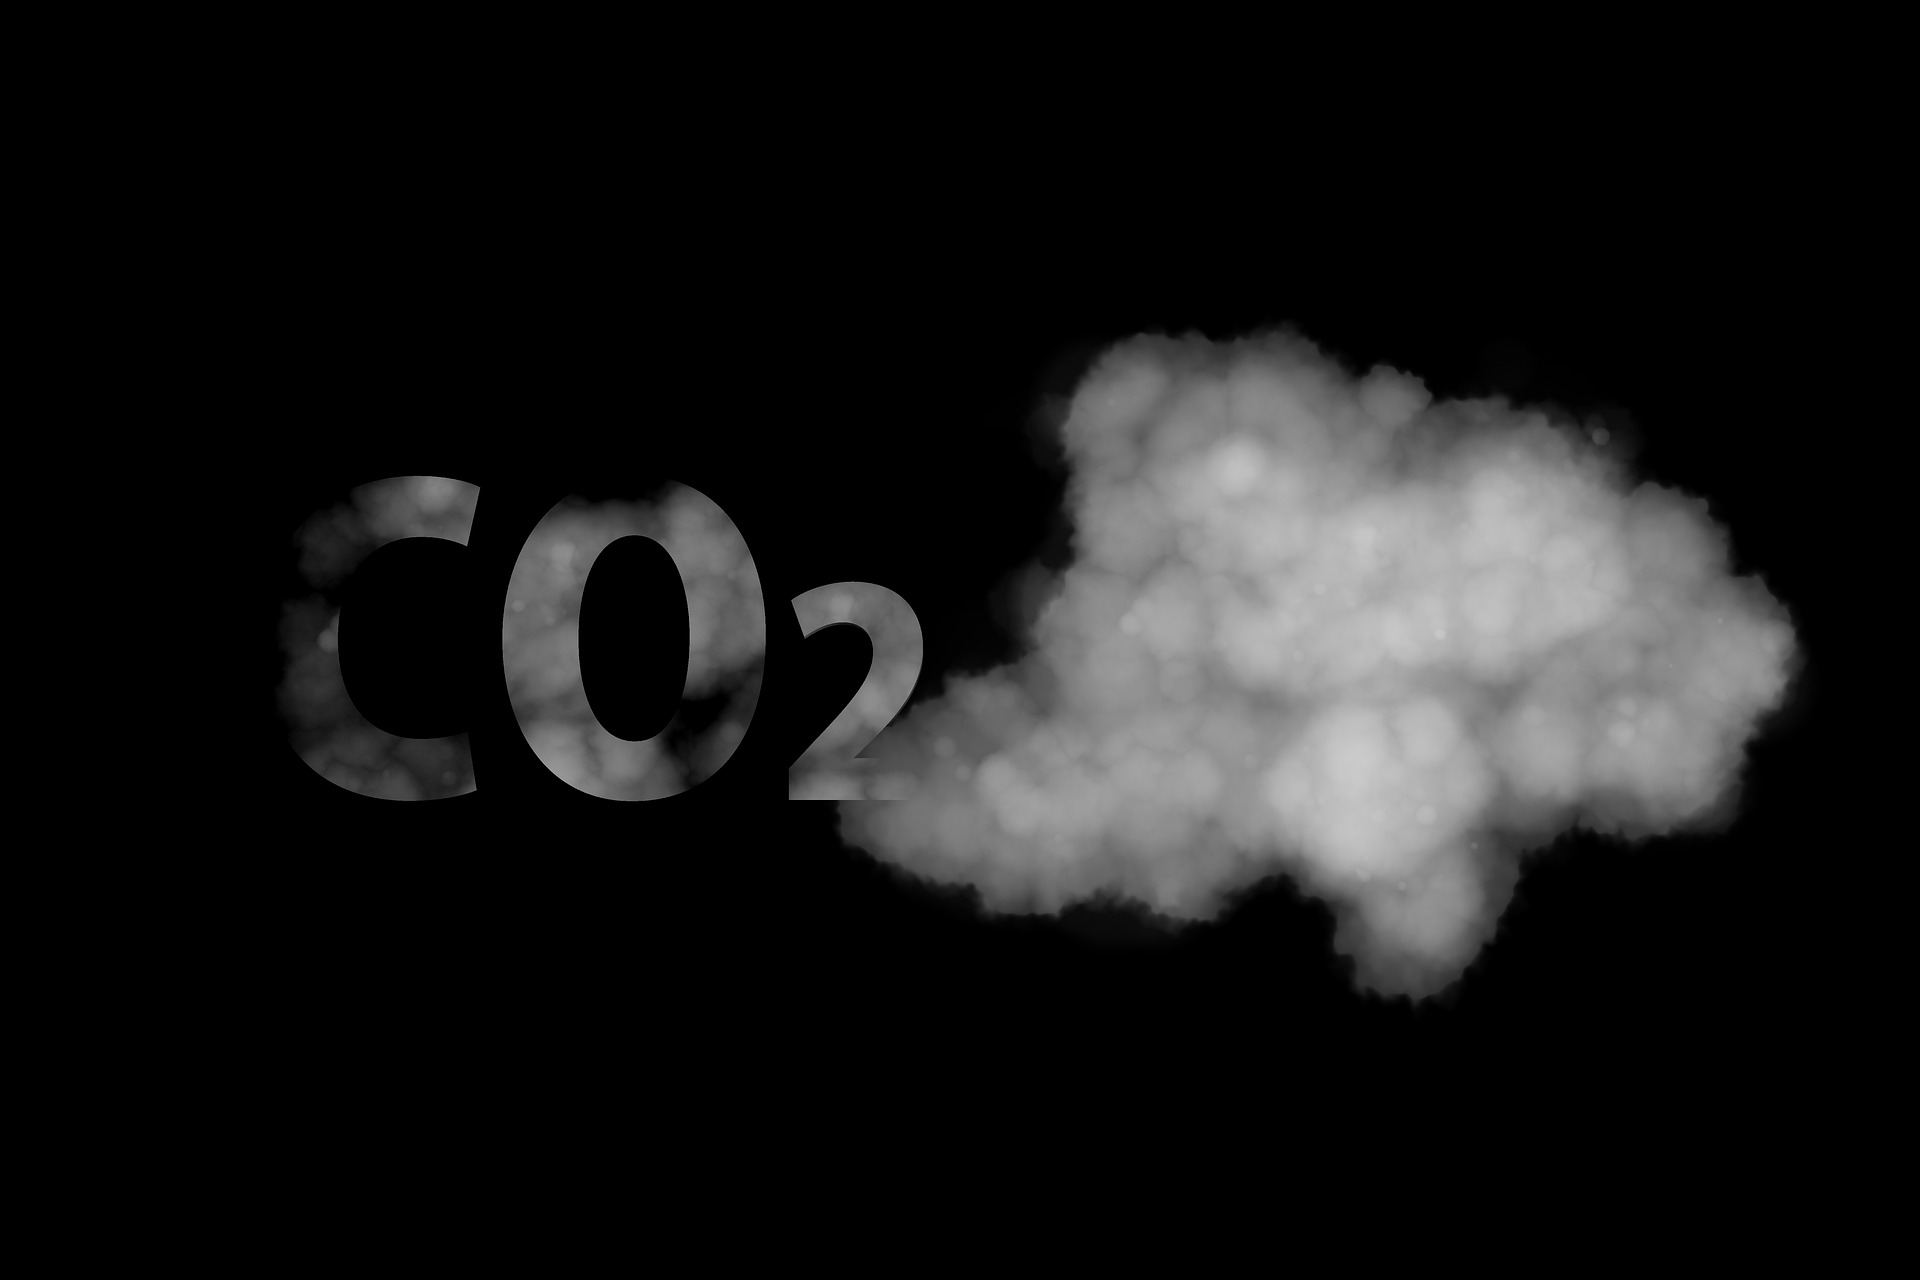 CO2 + coud